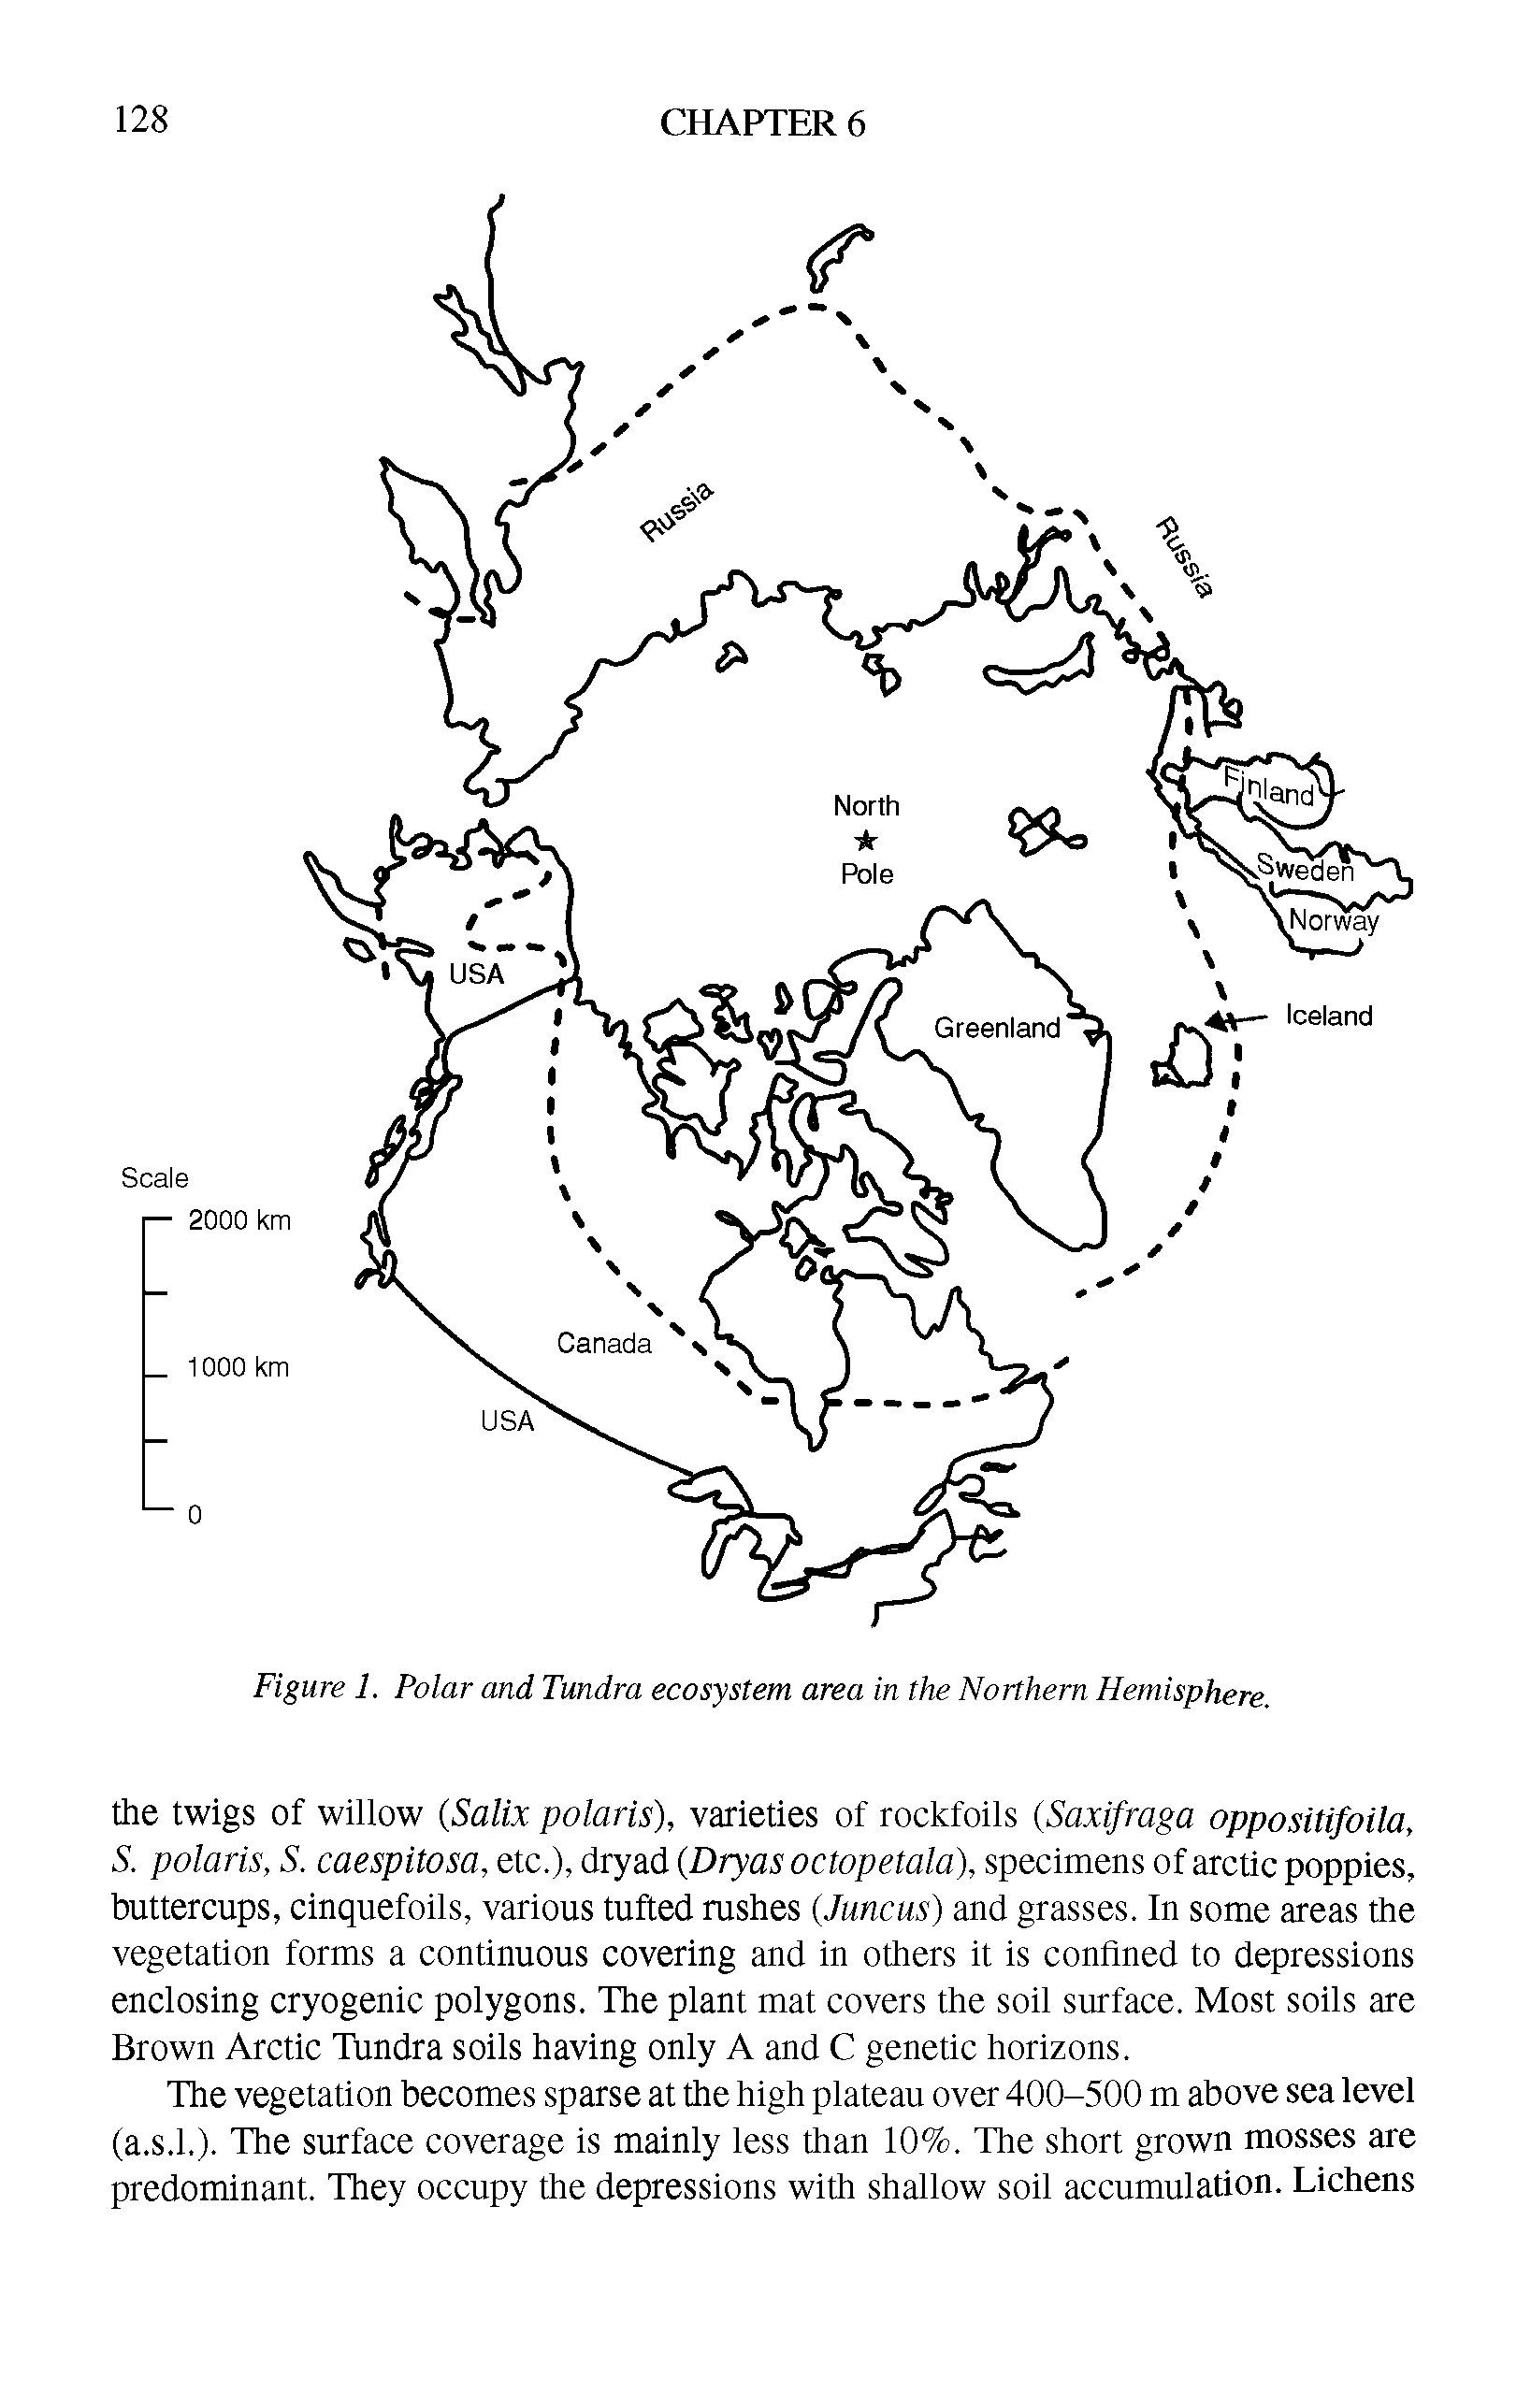 Figure 1. Polar and Tundra ecosystem area in the Northern Hemisphere.